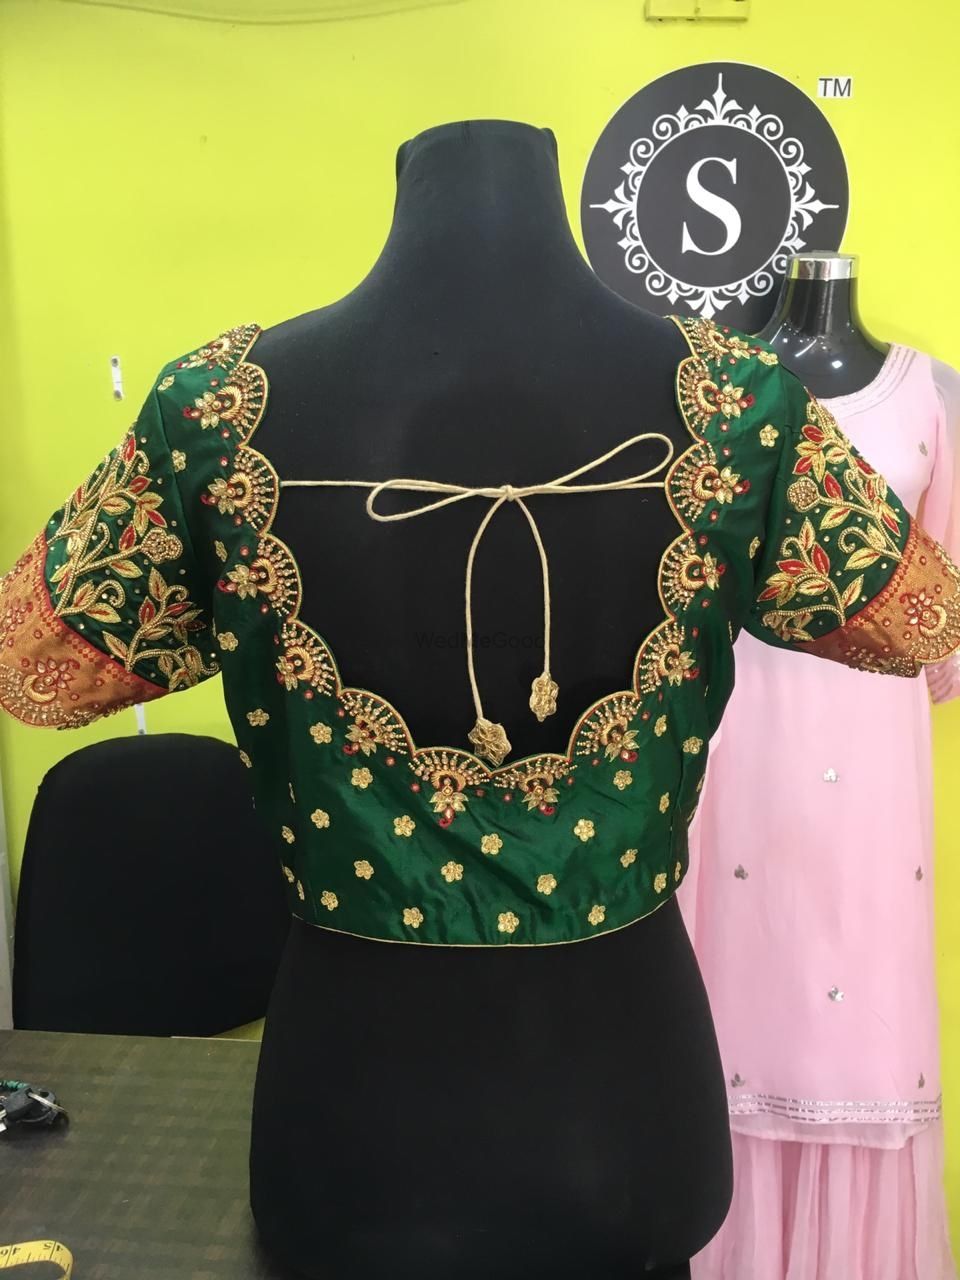 Photo By Sufi Designer Boutique - Bridal Wear